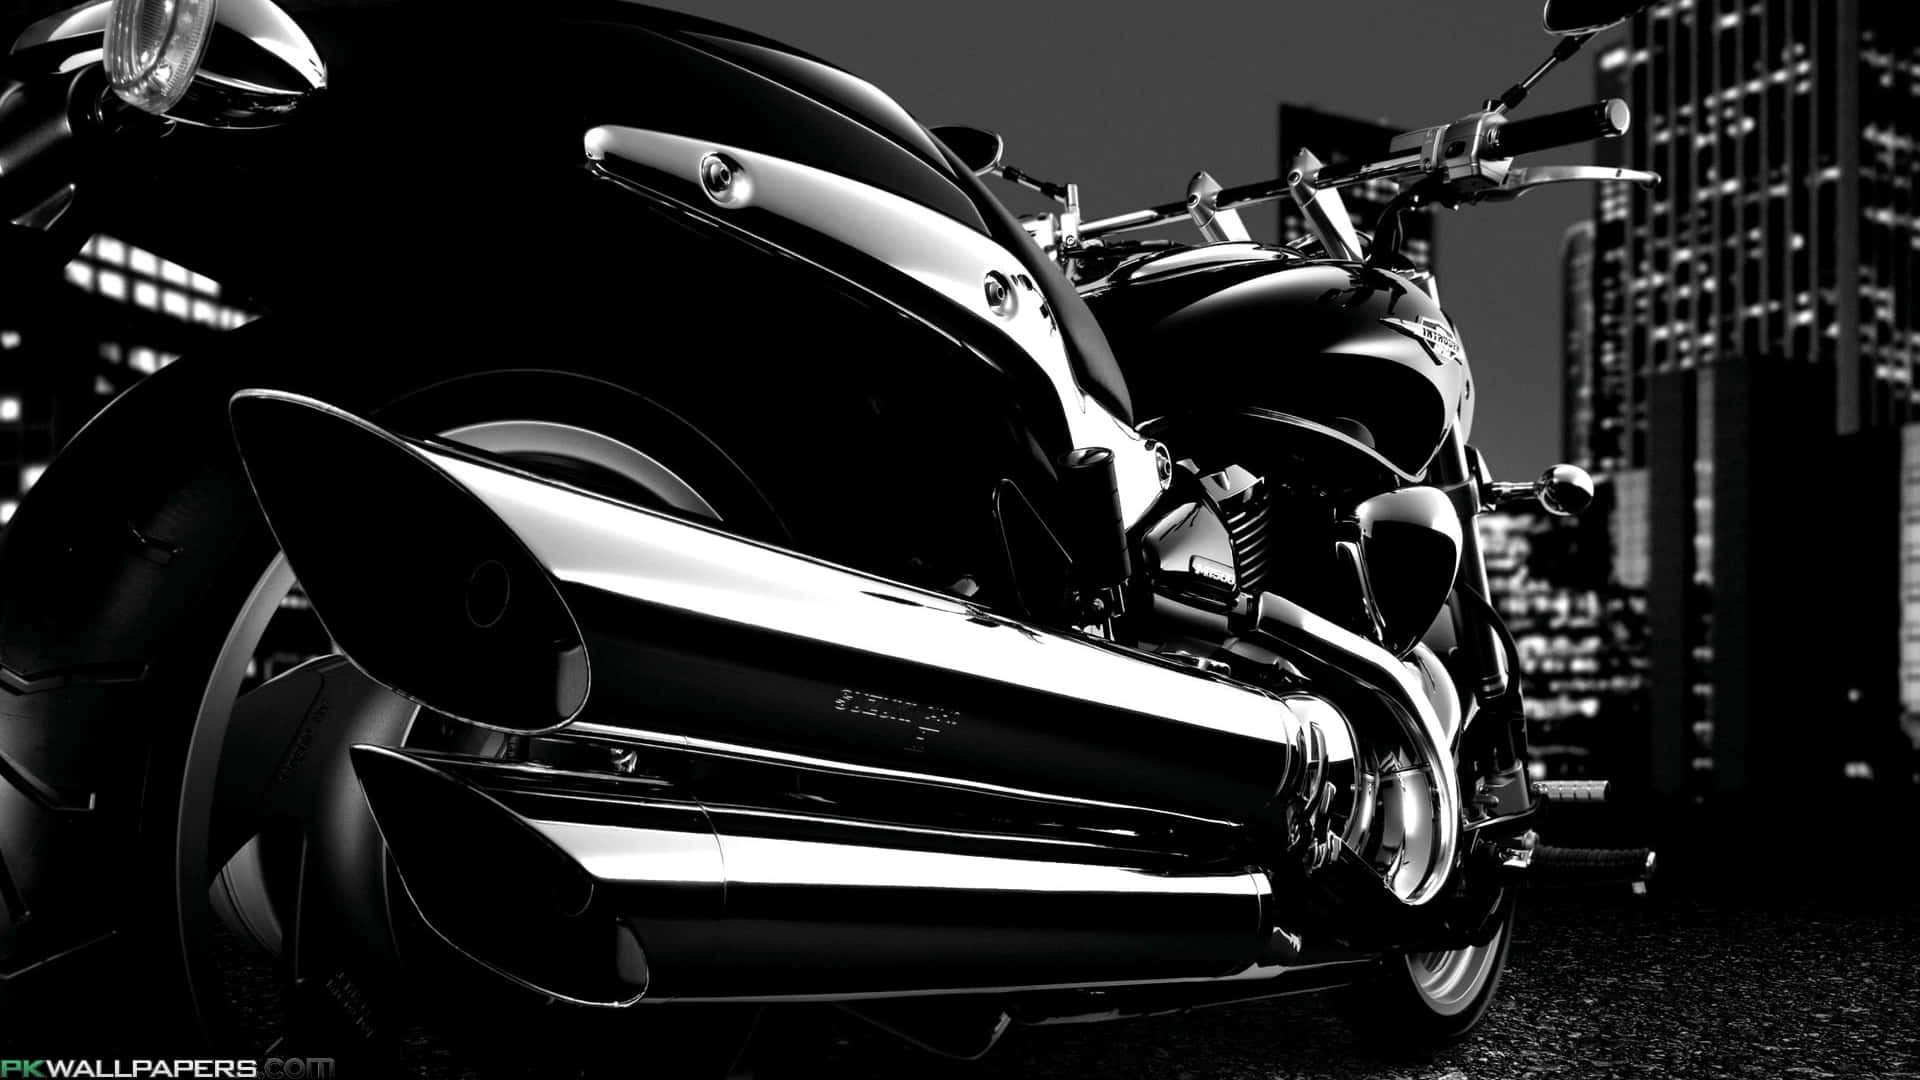 A Man Riding a Classic Harley Davidson HD Motorcycle Wallpaper